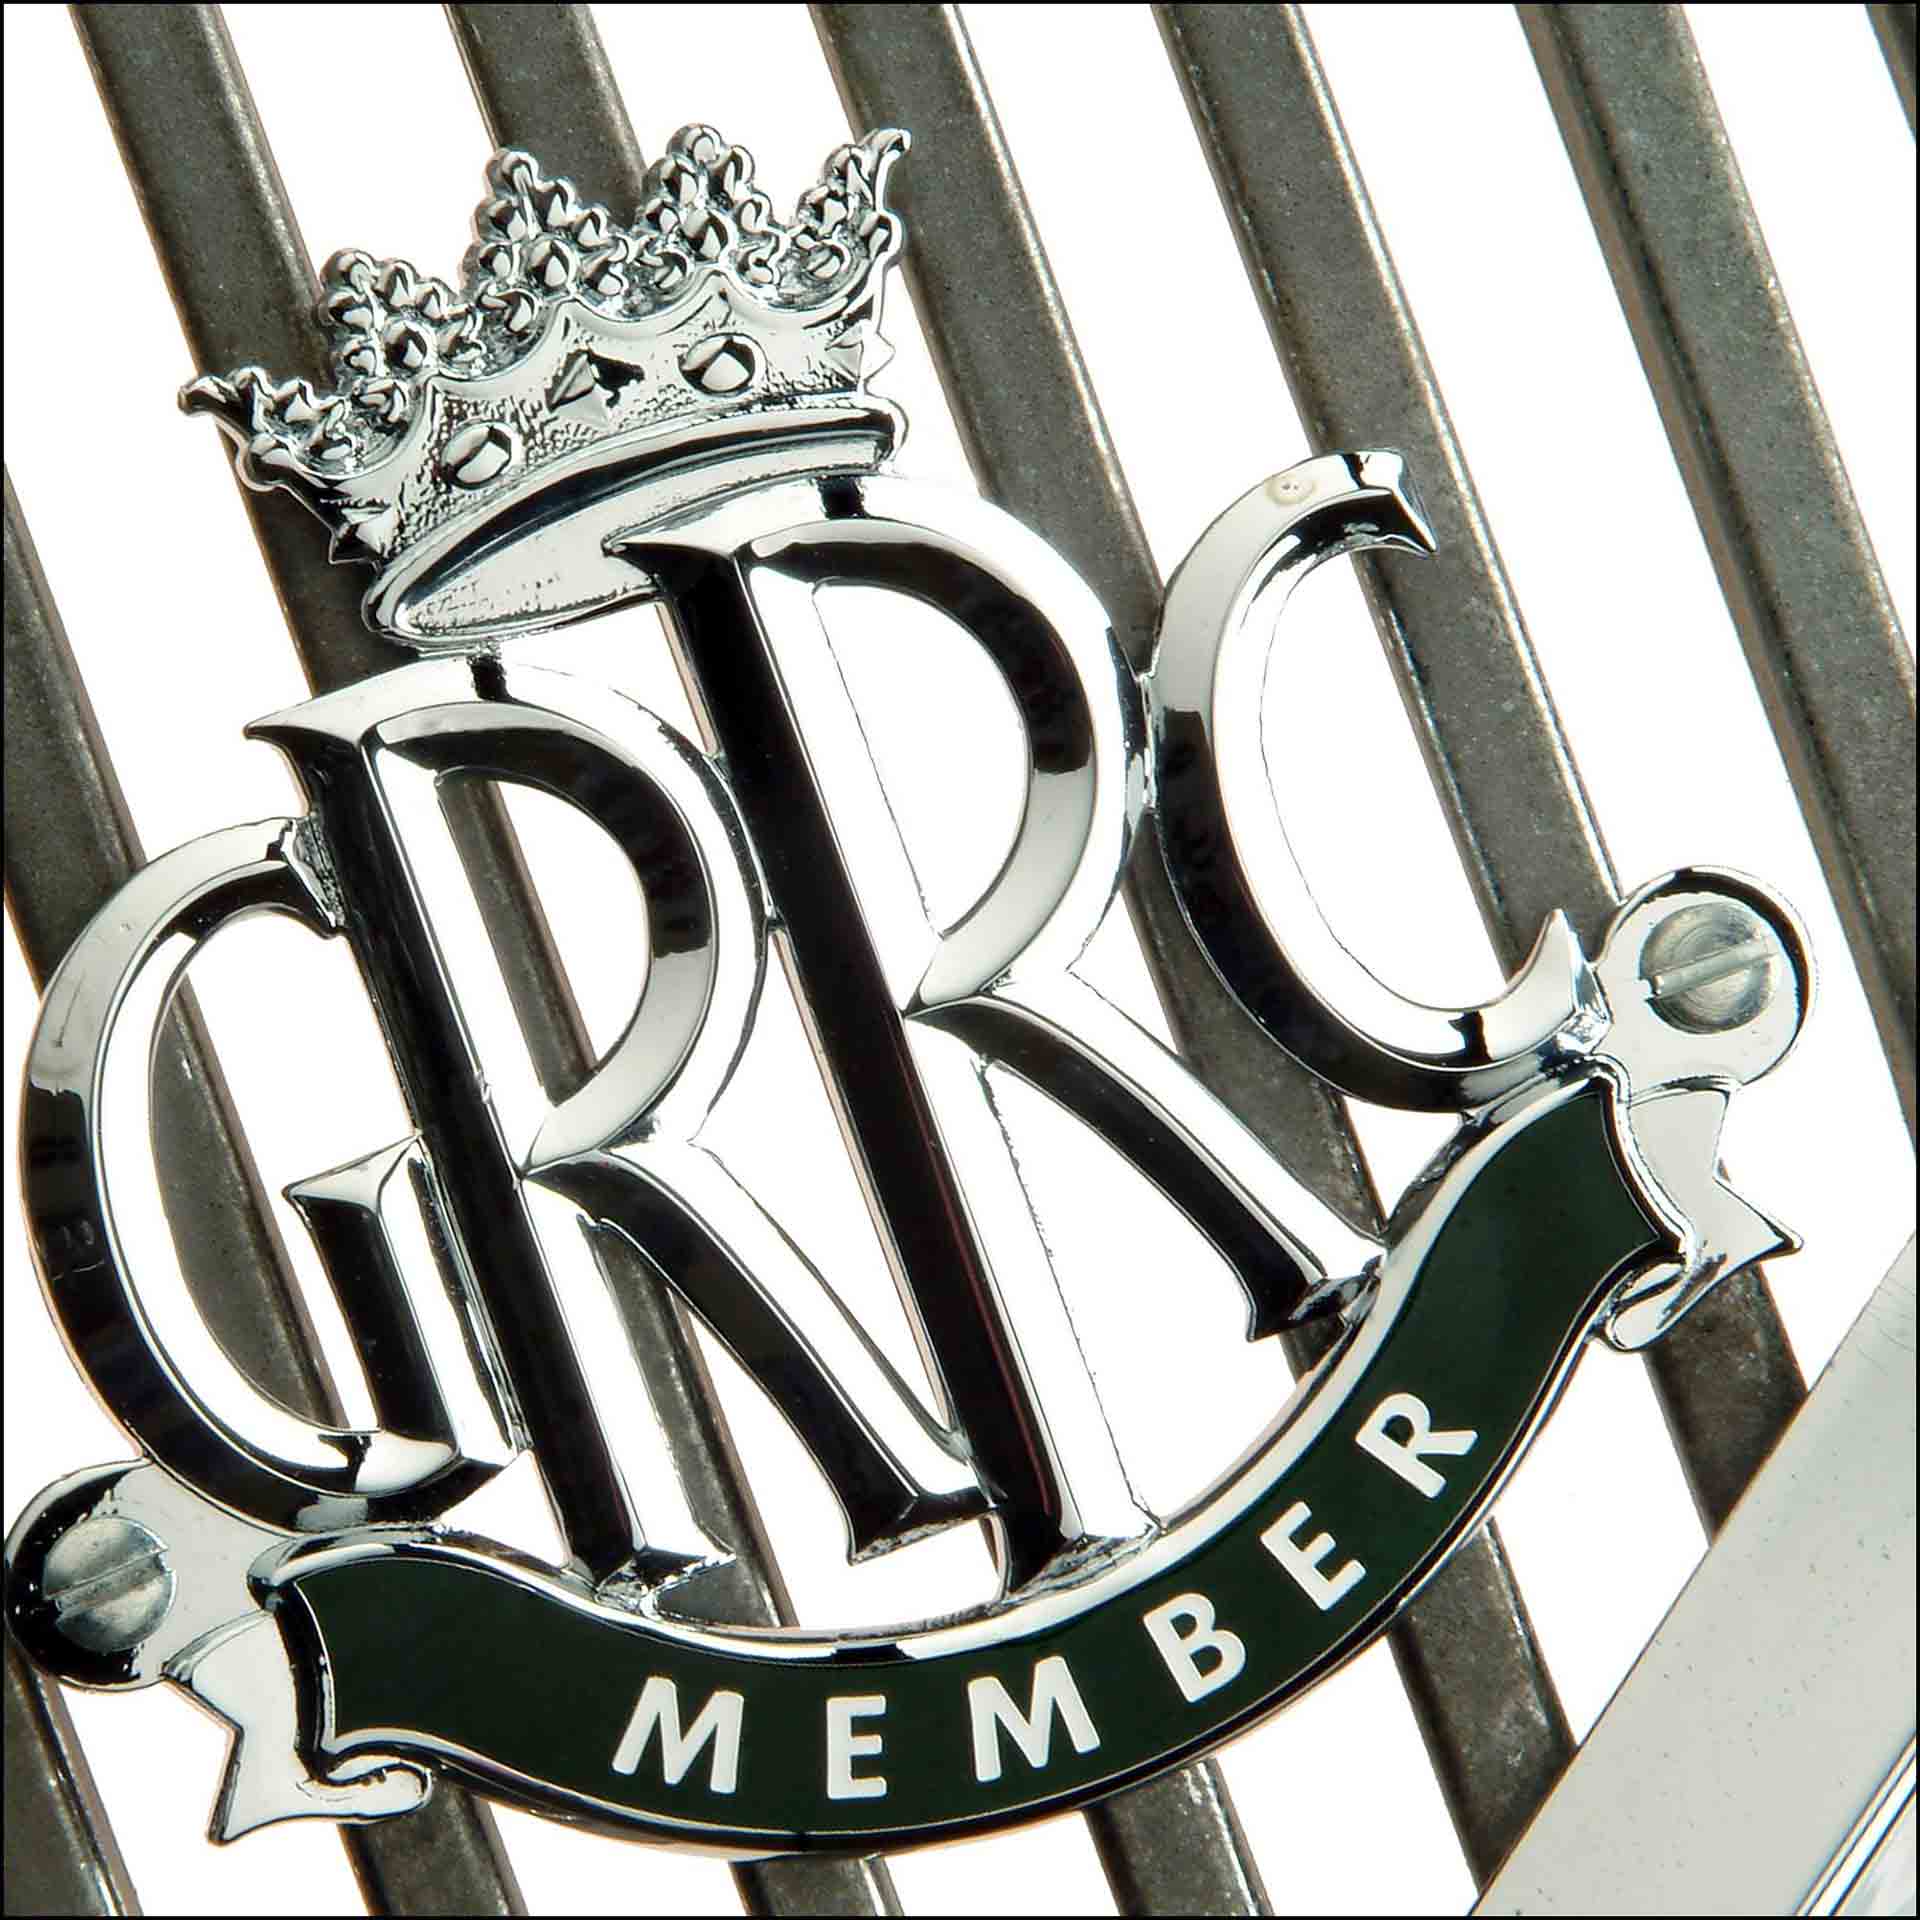 GRRC Members – The Goodwood Shop